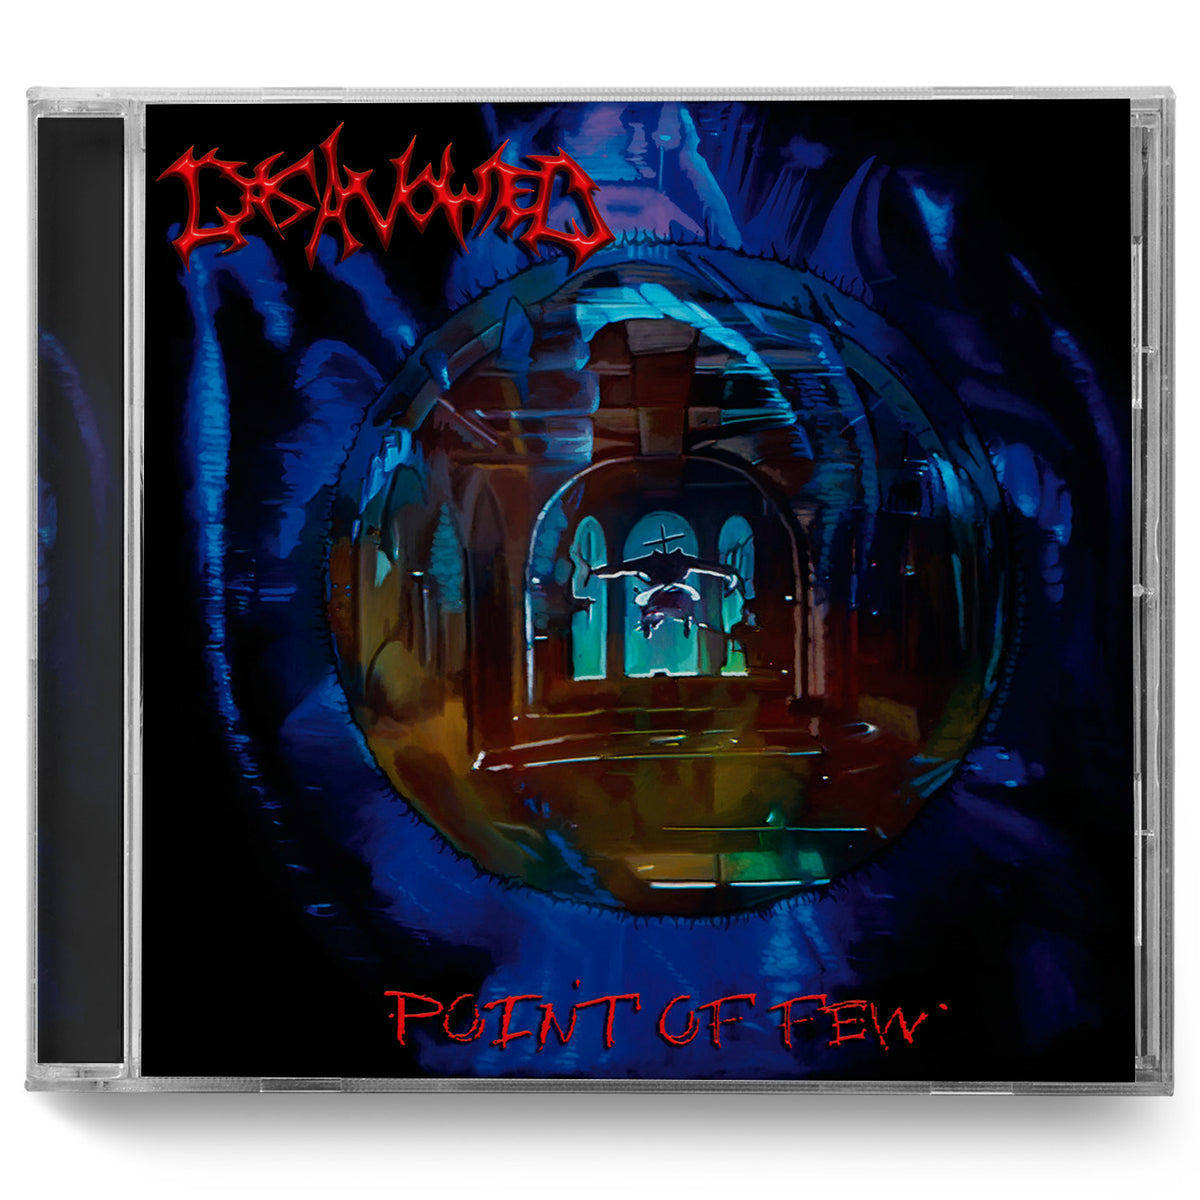 Disavowed "Point of Few" CD - Miasma Records